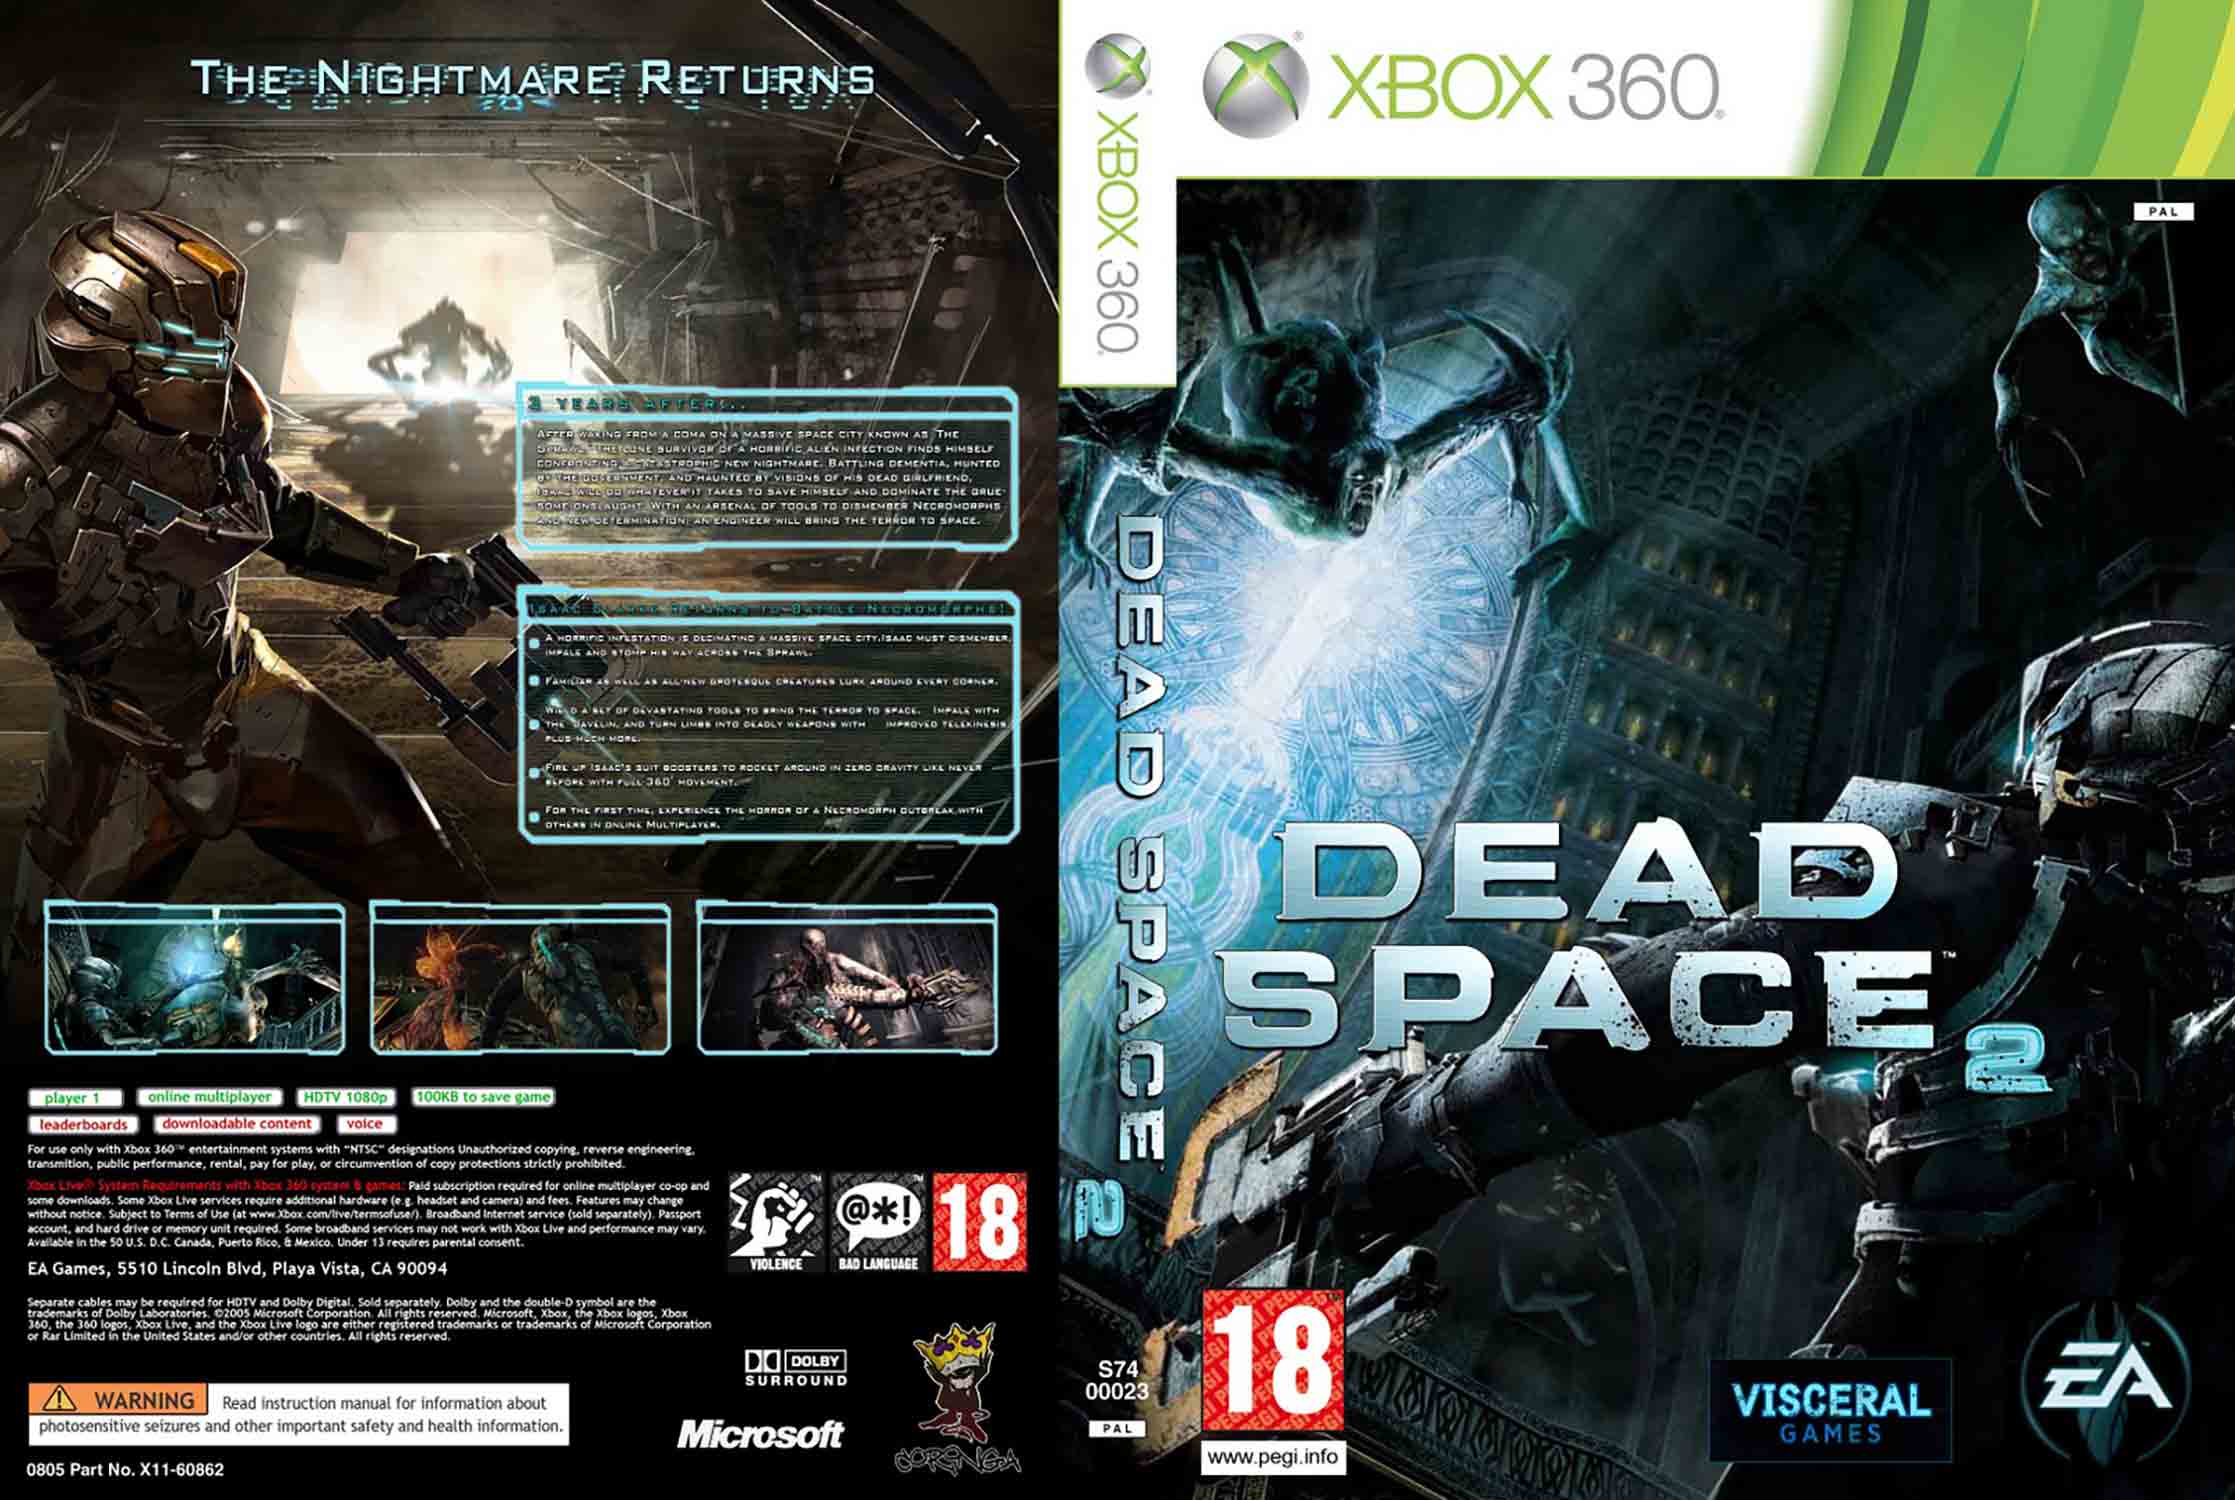 Dead Space 2 Xbox 360